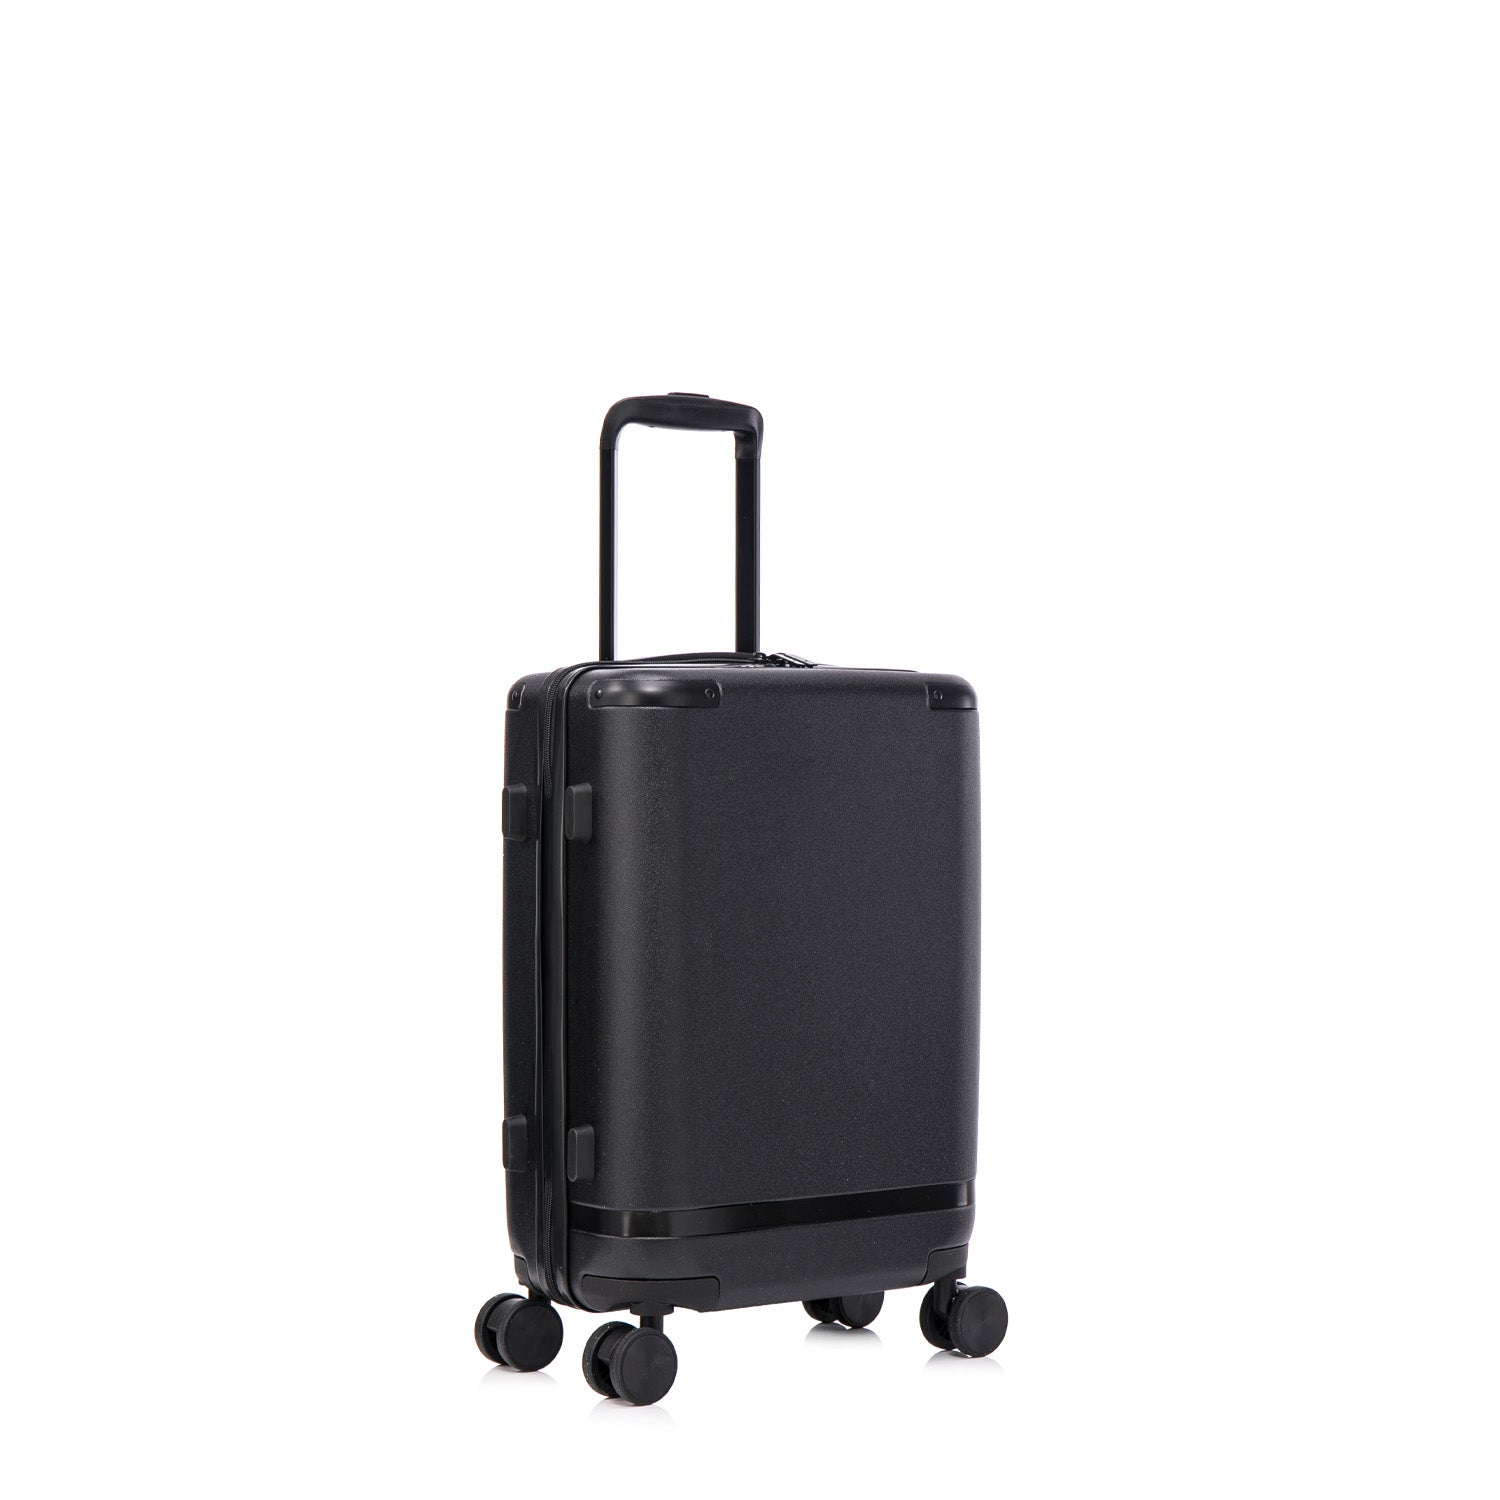 Qantas- QF250 ROME 56cm Small cabin spinner suitcase - Black-5